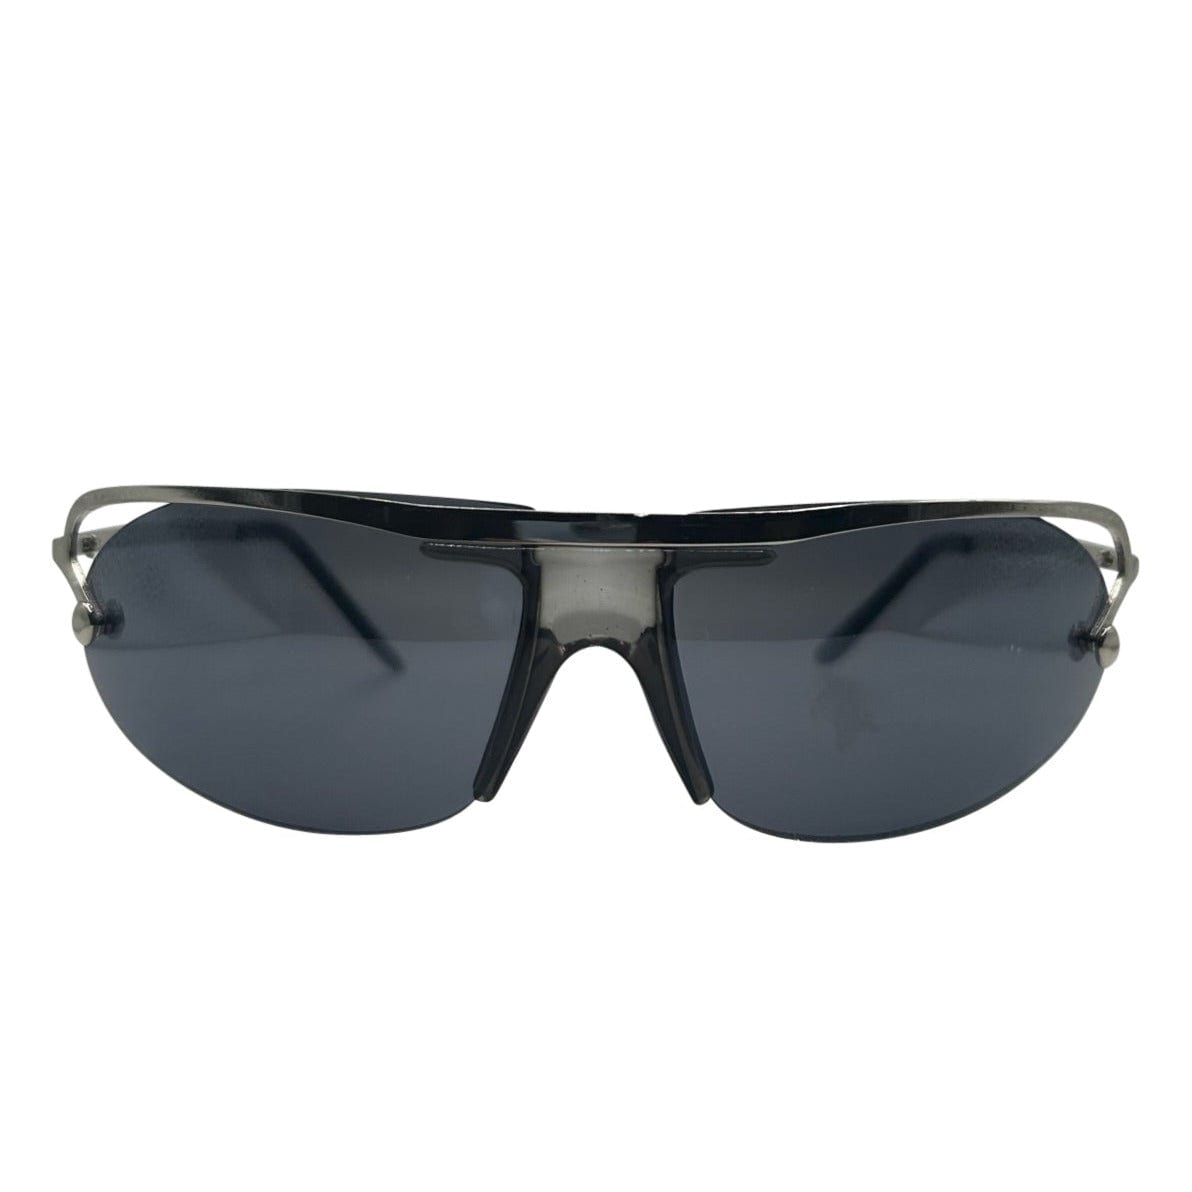 Shop Garb Gloss black/SD Vintage Sports Sunglasses for Men